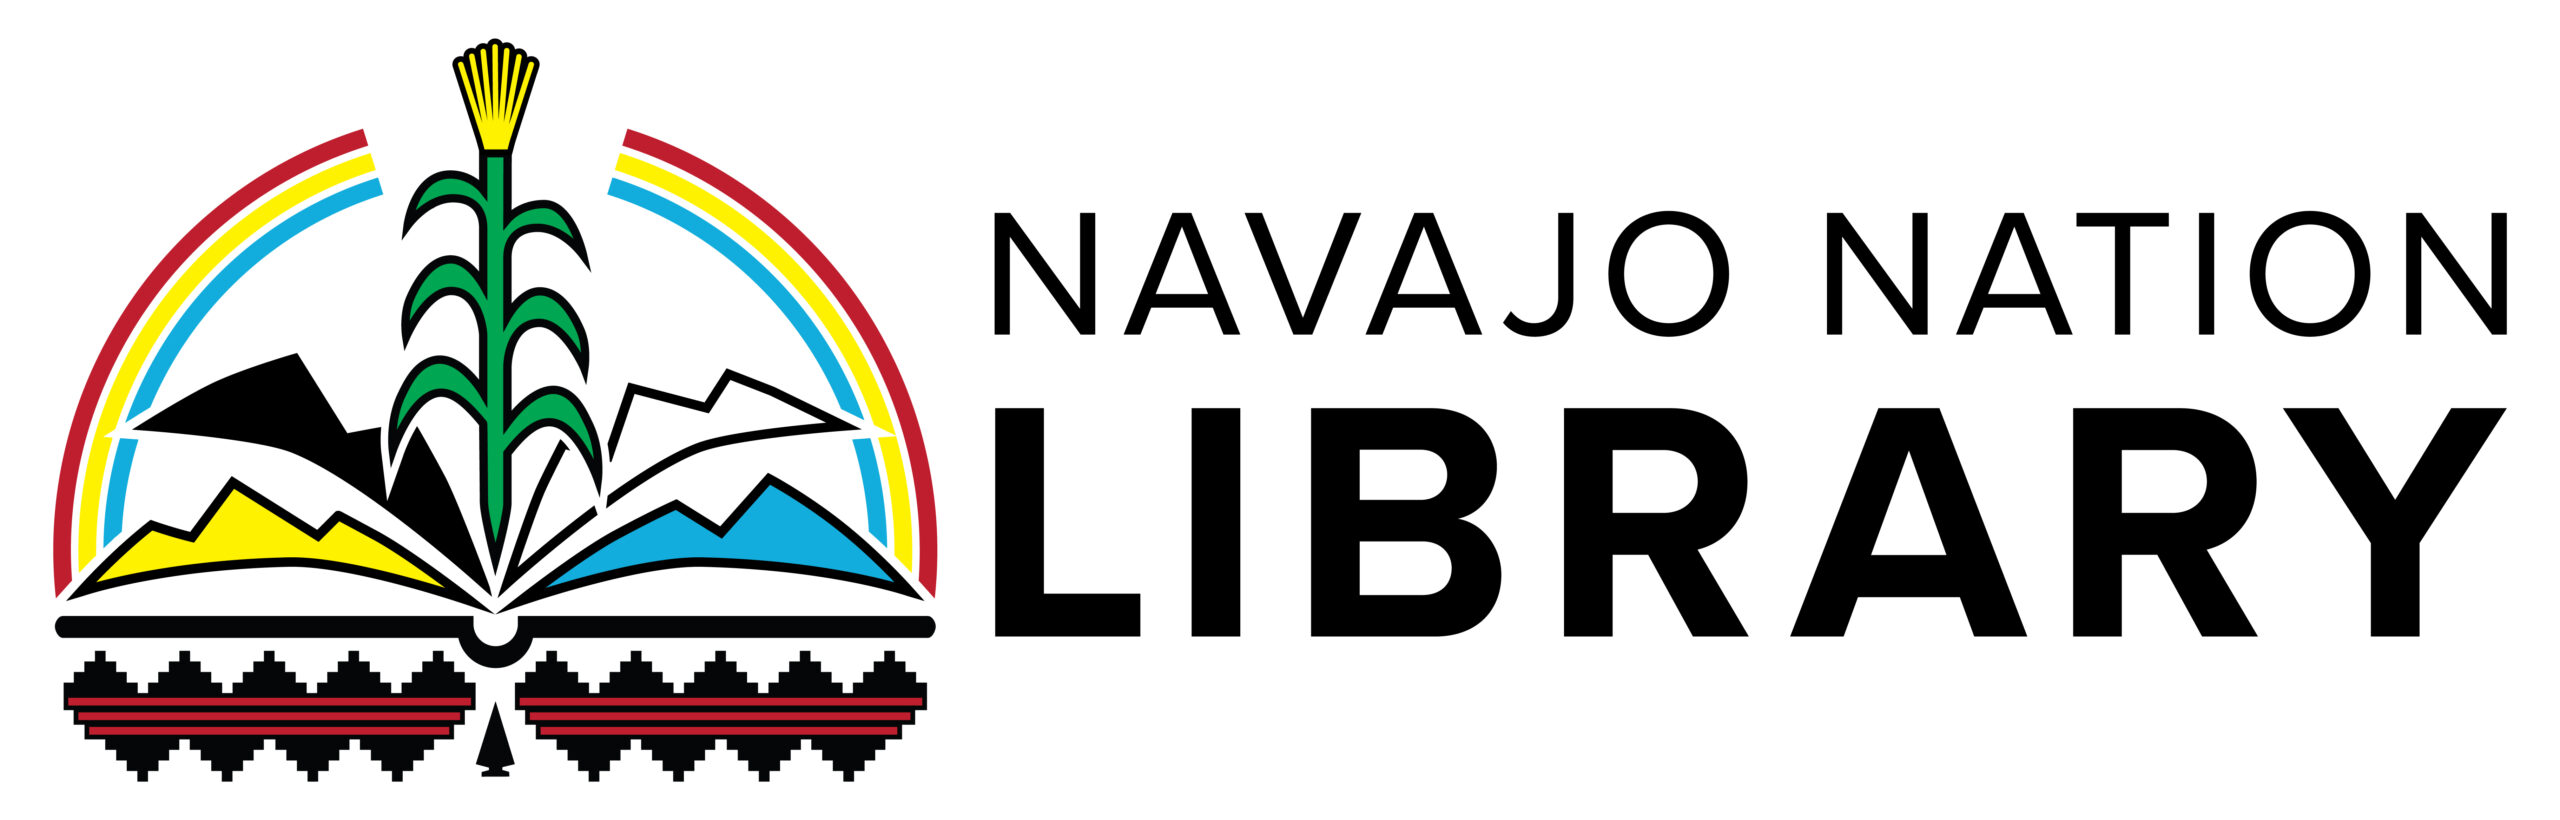 The Navajo Nation Library